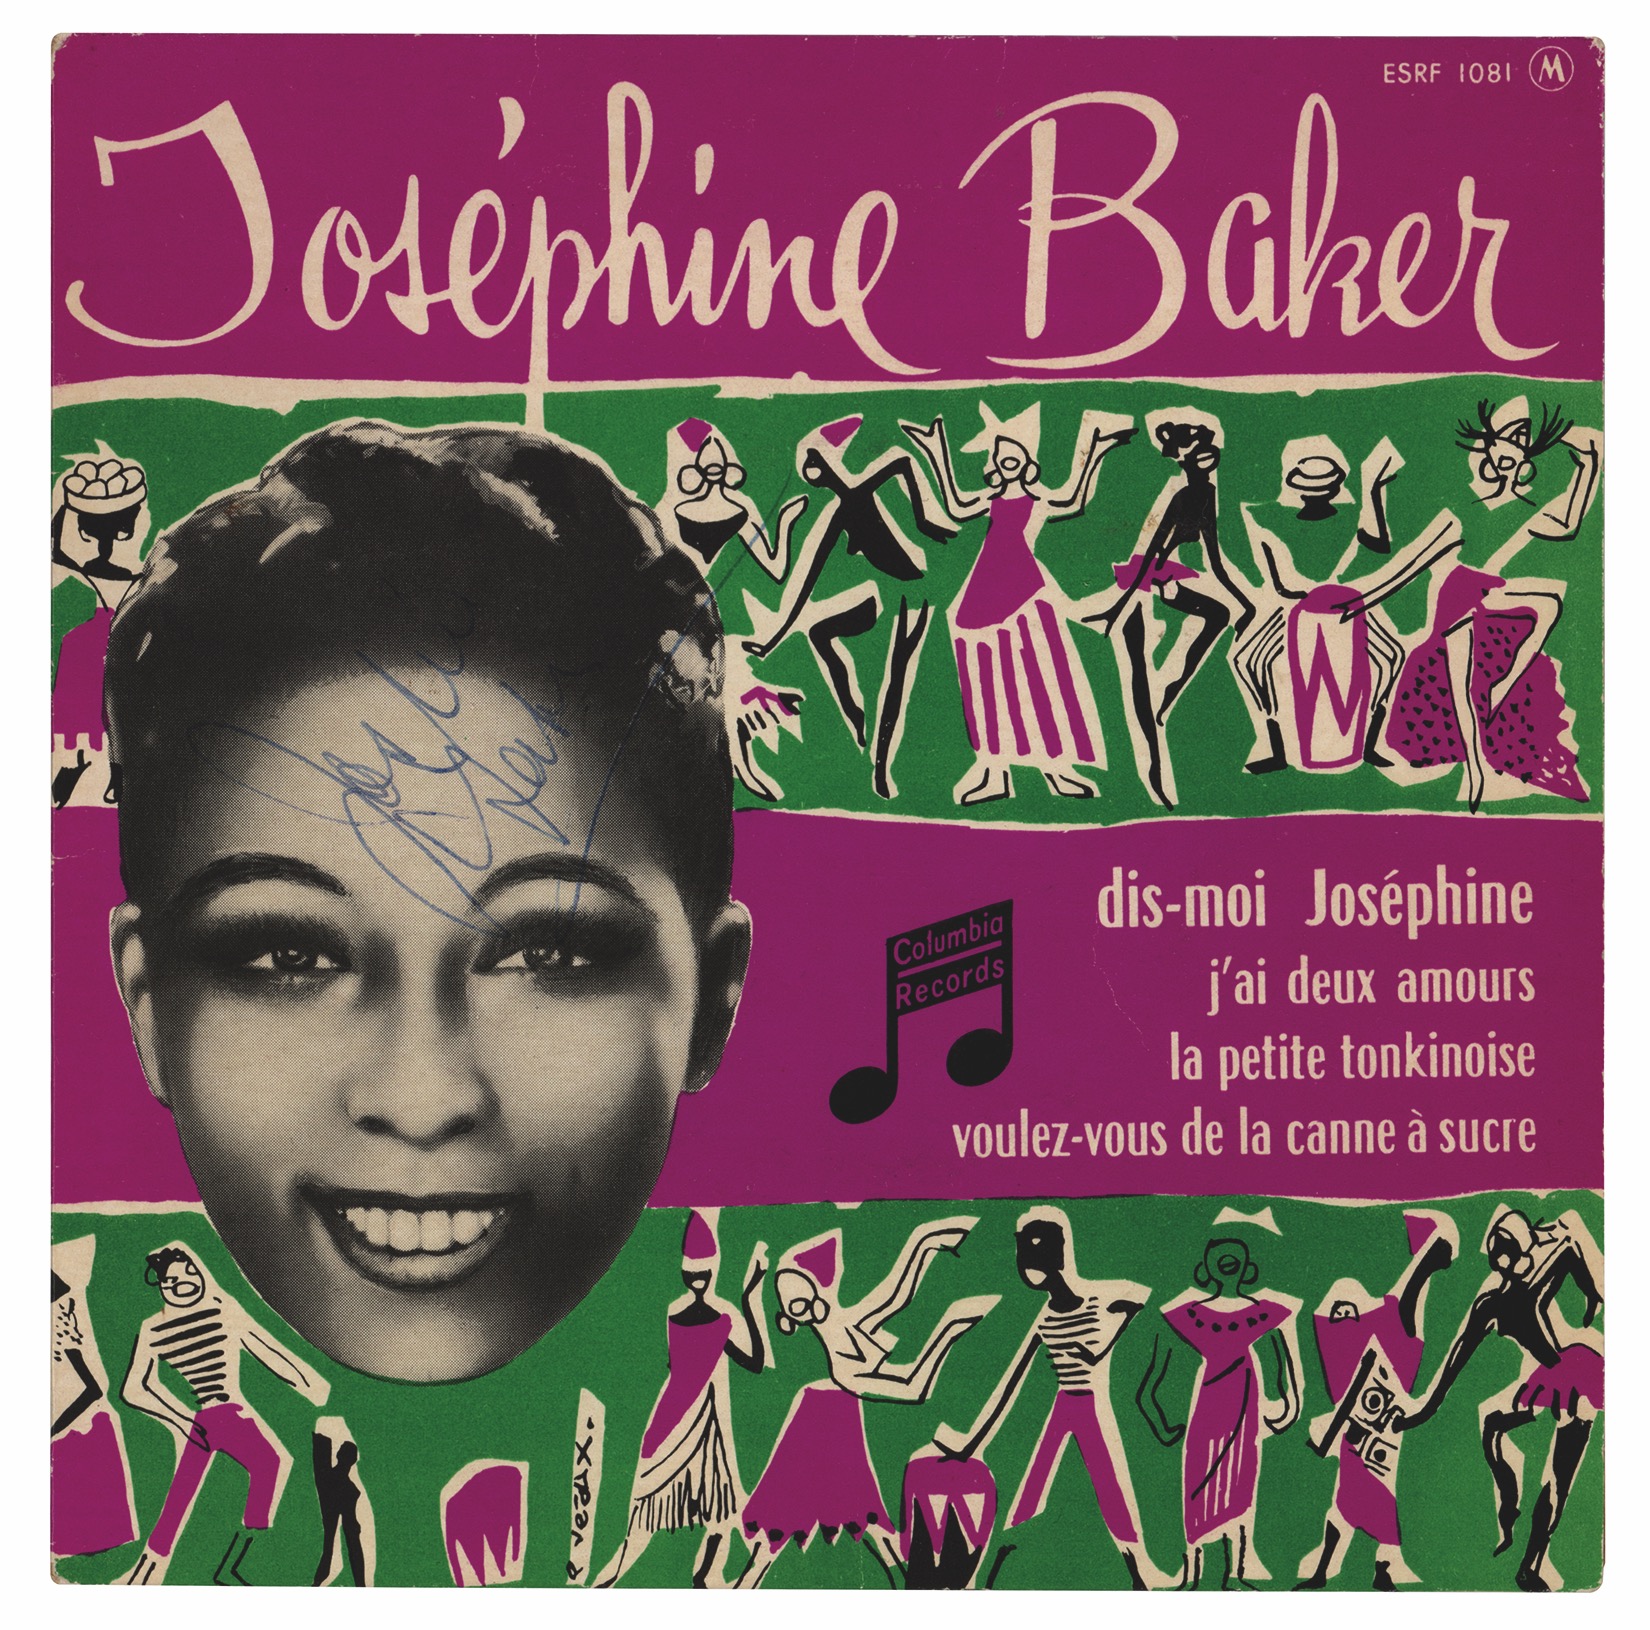 Lot #490 Josephine Baker Signed 45 RPM Record - Image 1